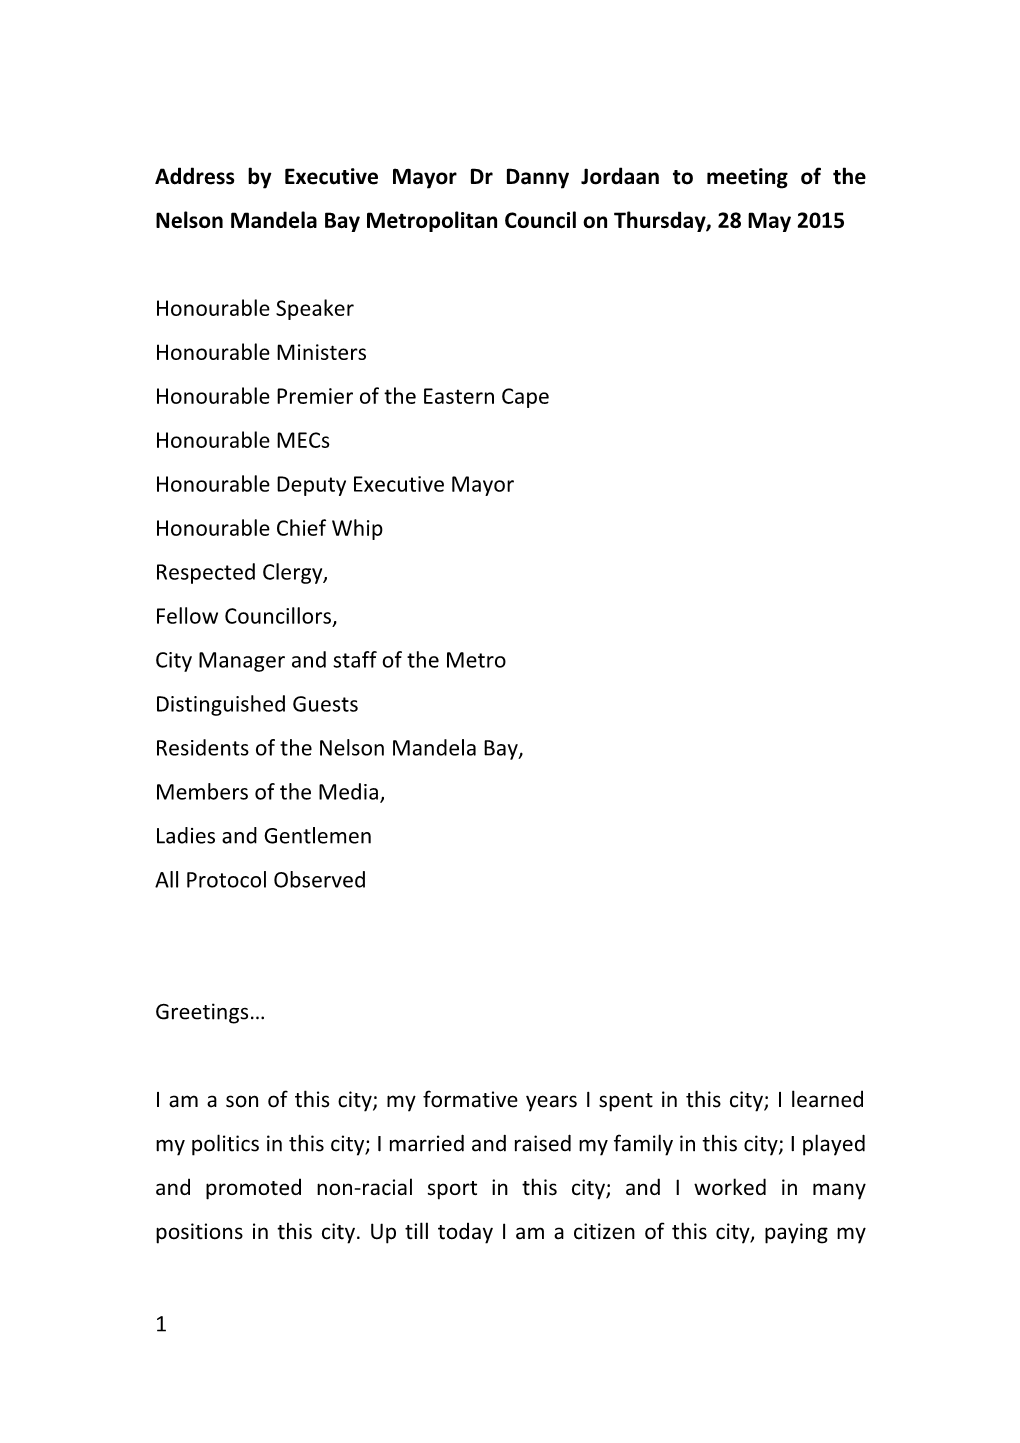 Address by Executive Mayor Dr Danny Jordaan to Meeting of the Nelson Mandela Bay Metropolitan